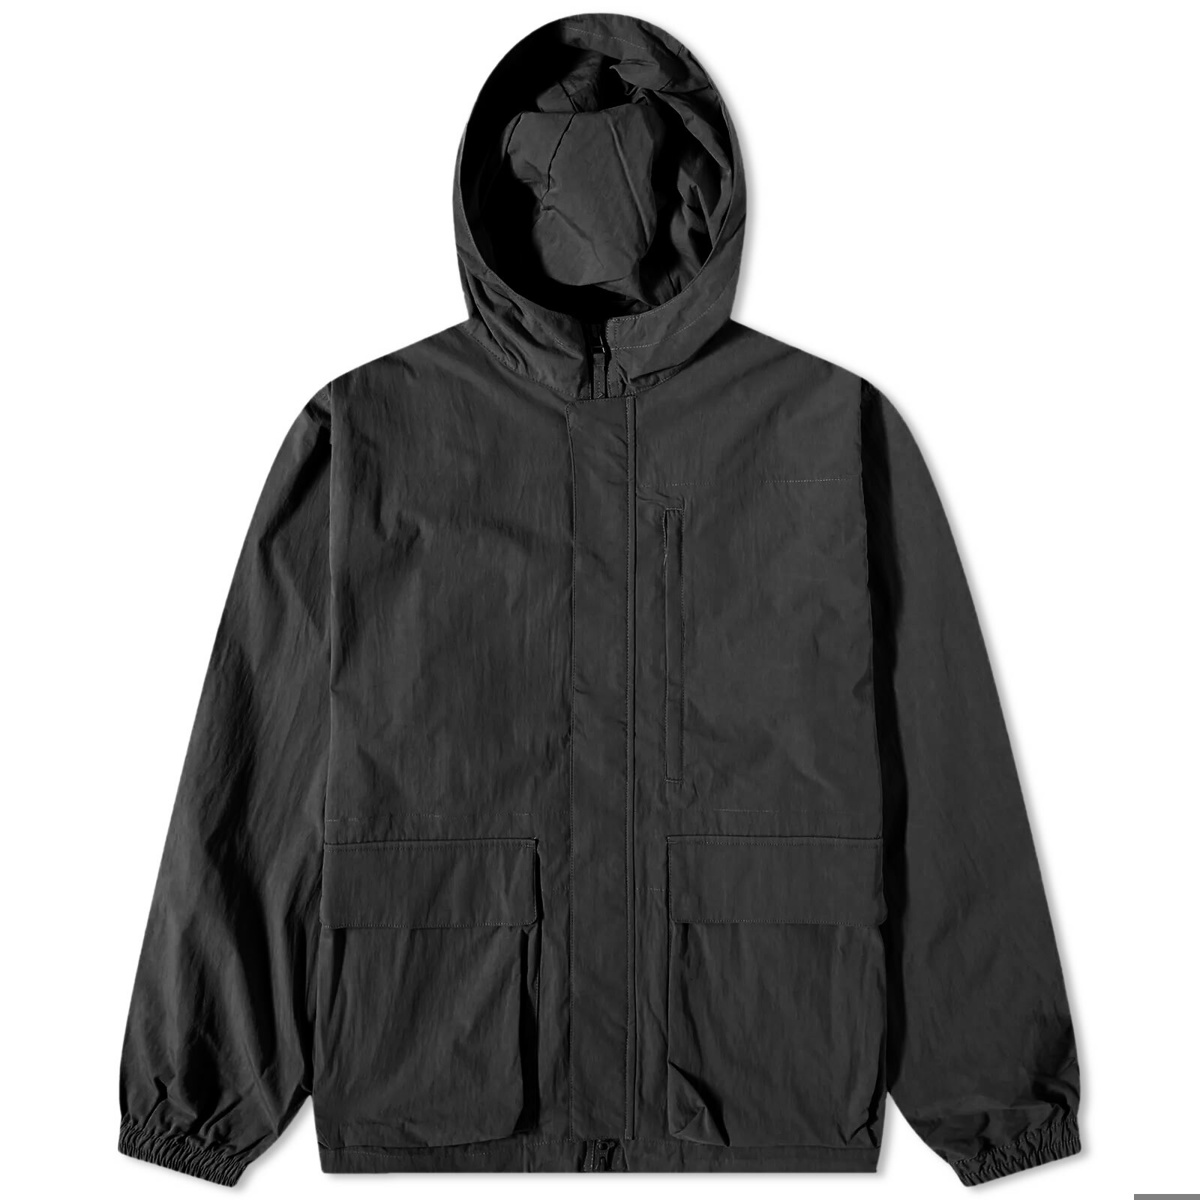 FrizmWORKS Men's CN Utility Parka Jacket in Black FrizmWORKS